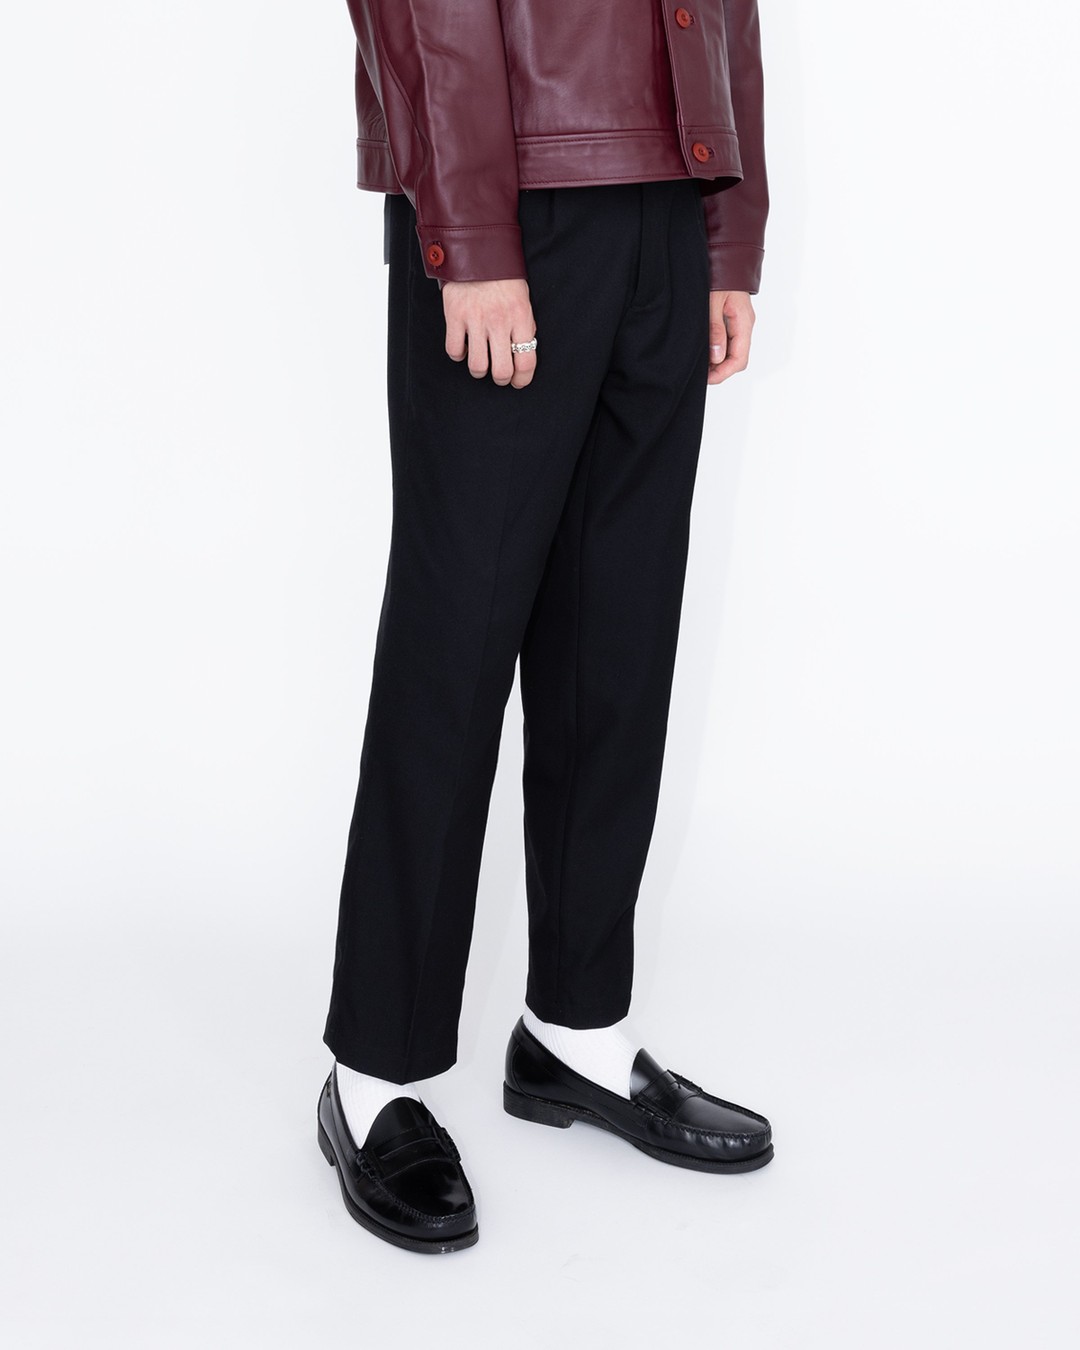 Highsnobiety HS05 – Wool Dress Pants Black - Pants - Black - Image 3